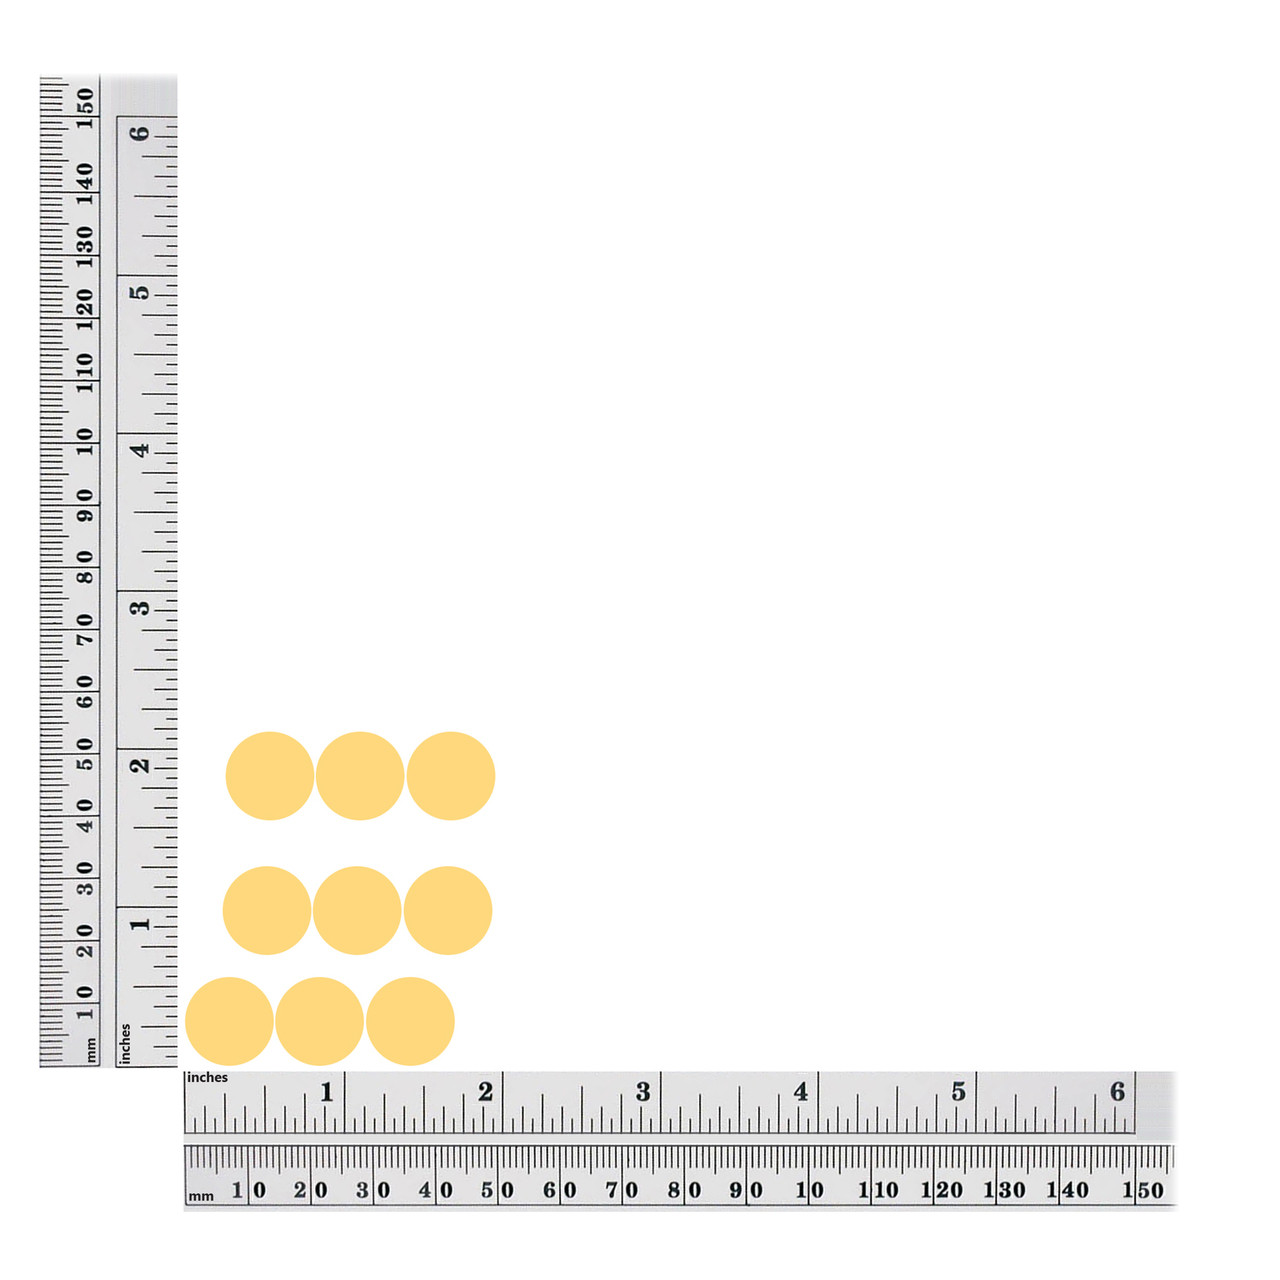 14mm-sequins size chart